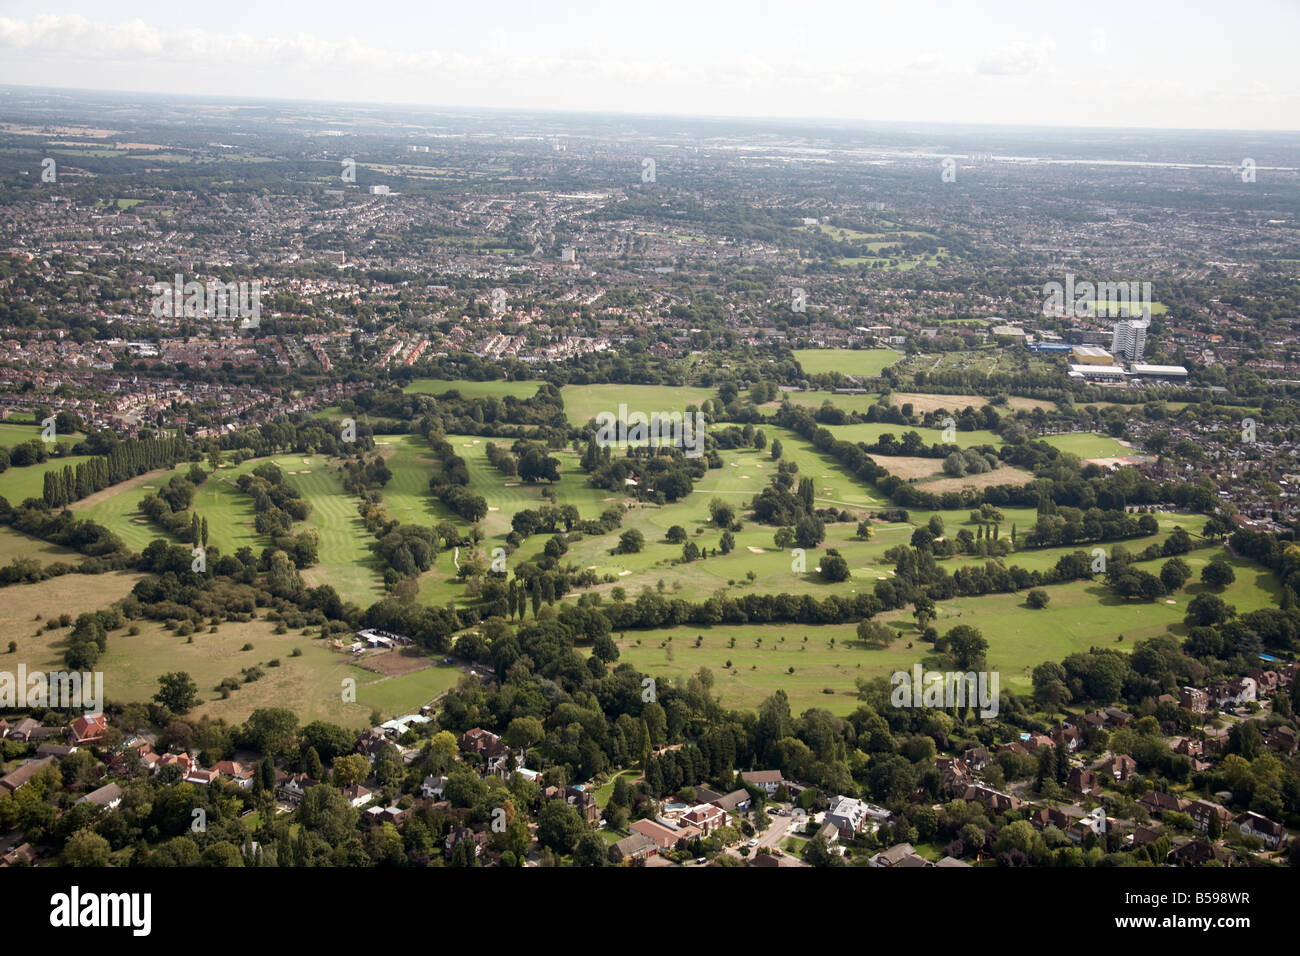 Luftbild Norden östlich von suburban South Herts Golfplatz Bäume beherbergt Totterige London N20 England UK Stockfoto